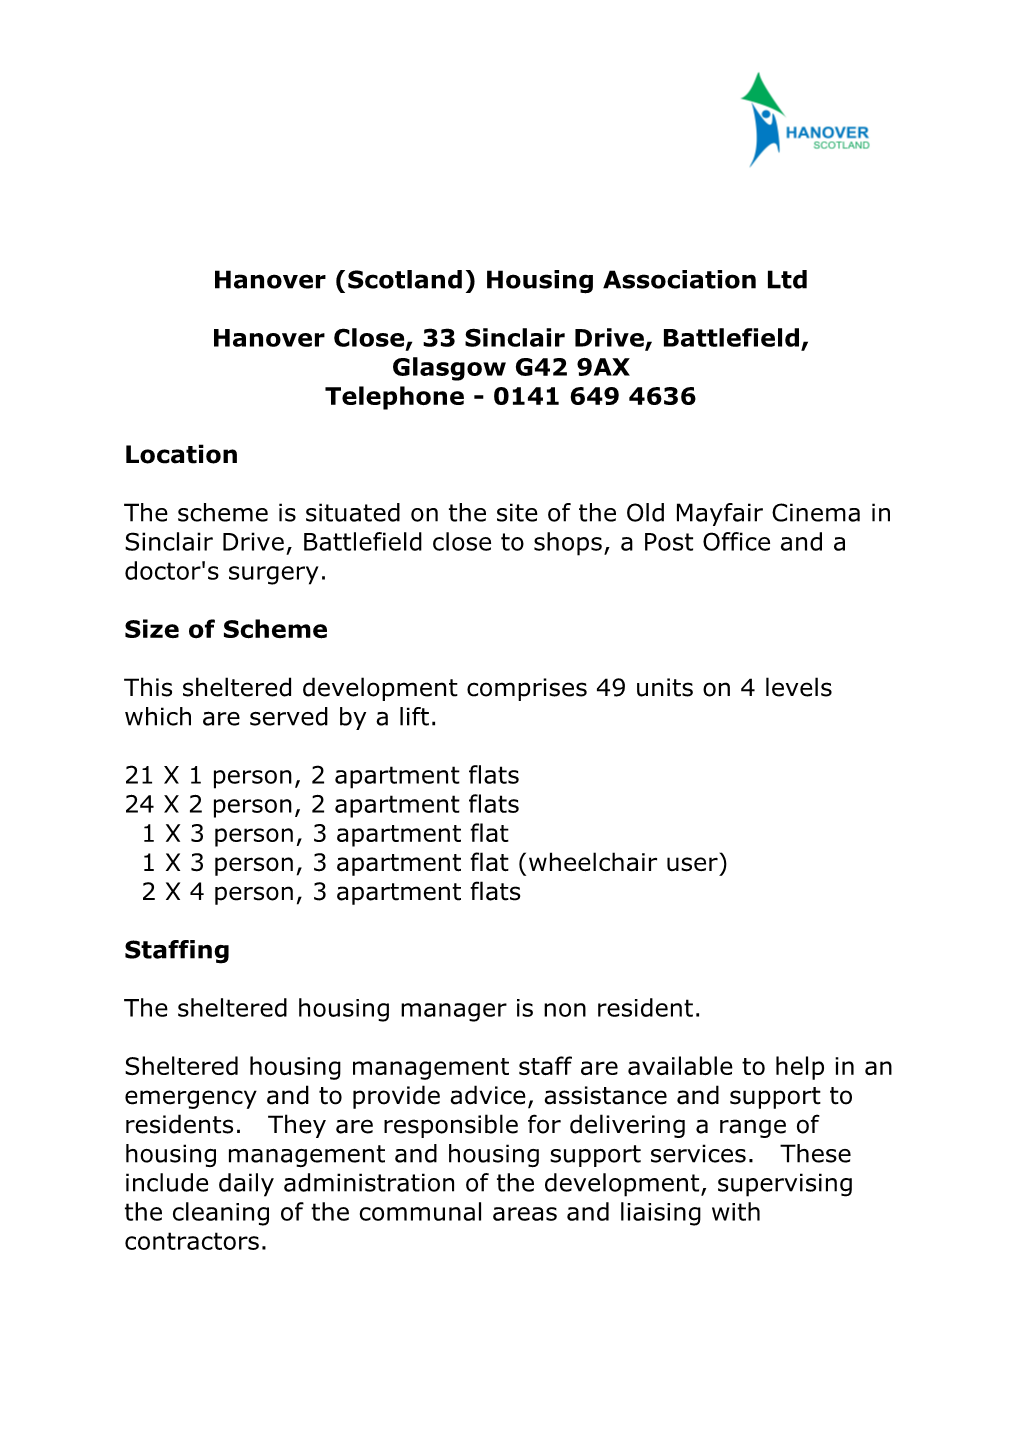 Hanover (Scotland) Housing Association Ltd s3